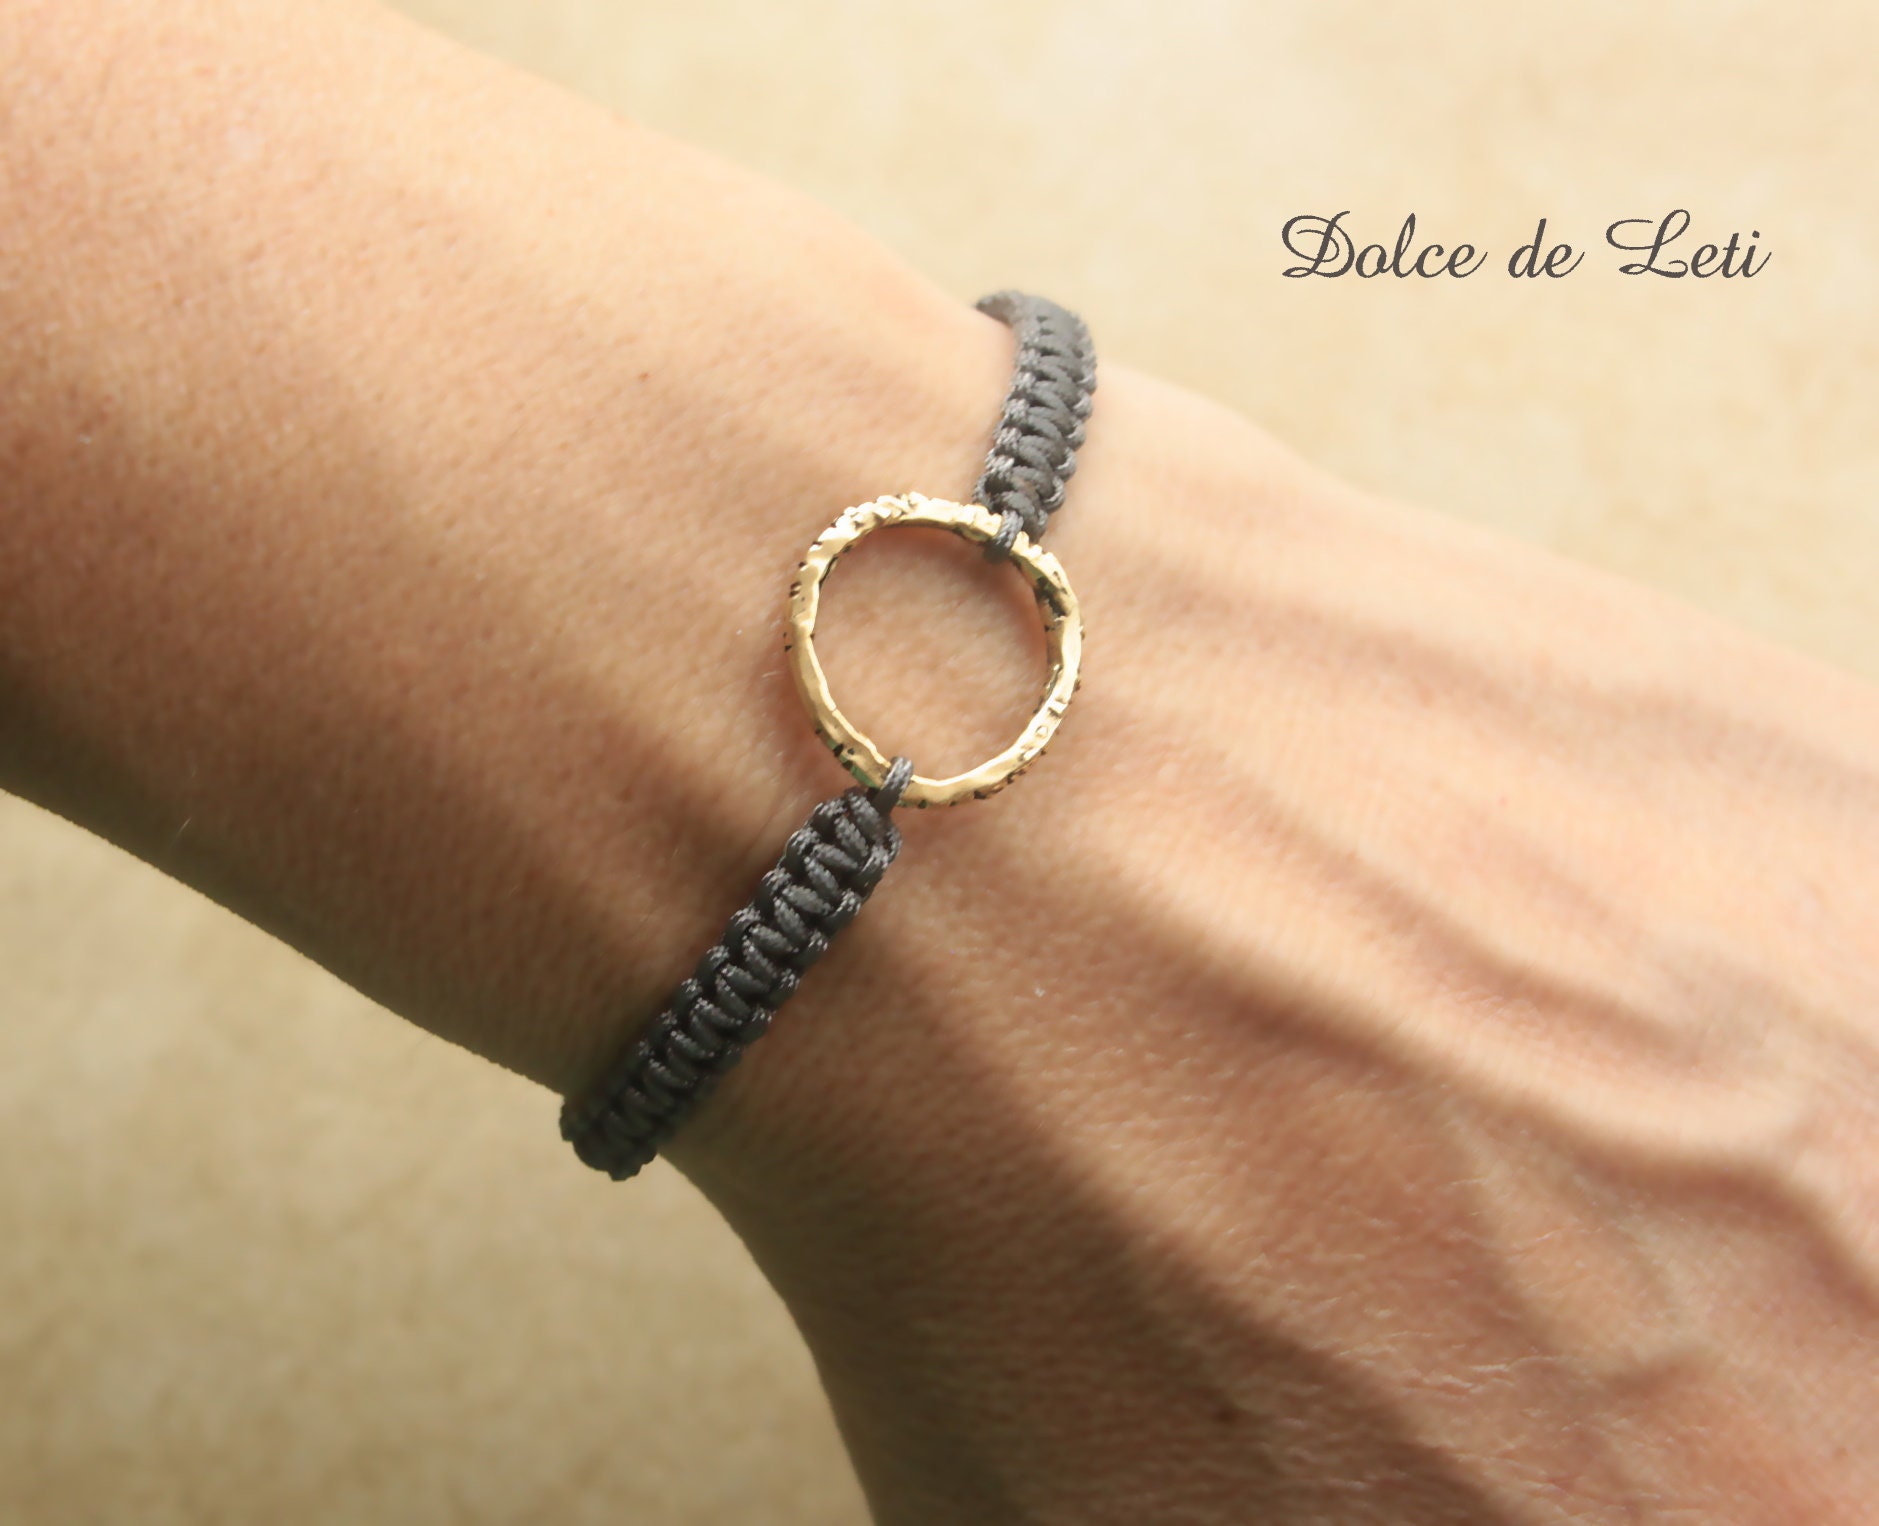 Artisan friendship karma bracelet for women handmade by Dolce de Leti. Gold macrame adjustable bracelet with small silver circle link